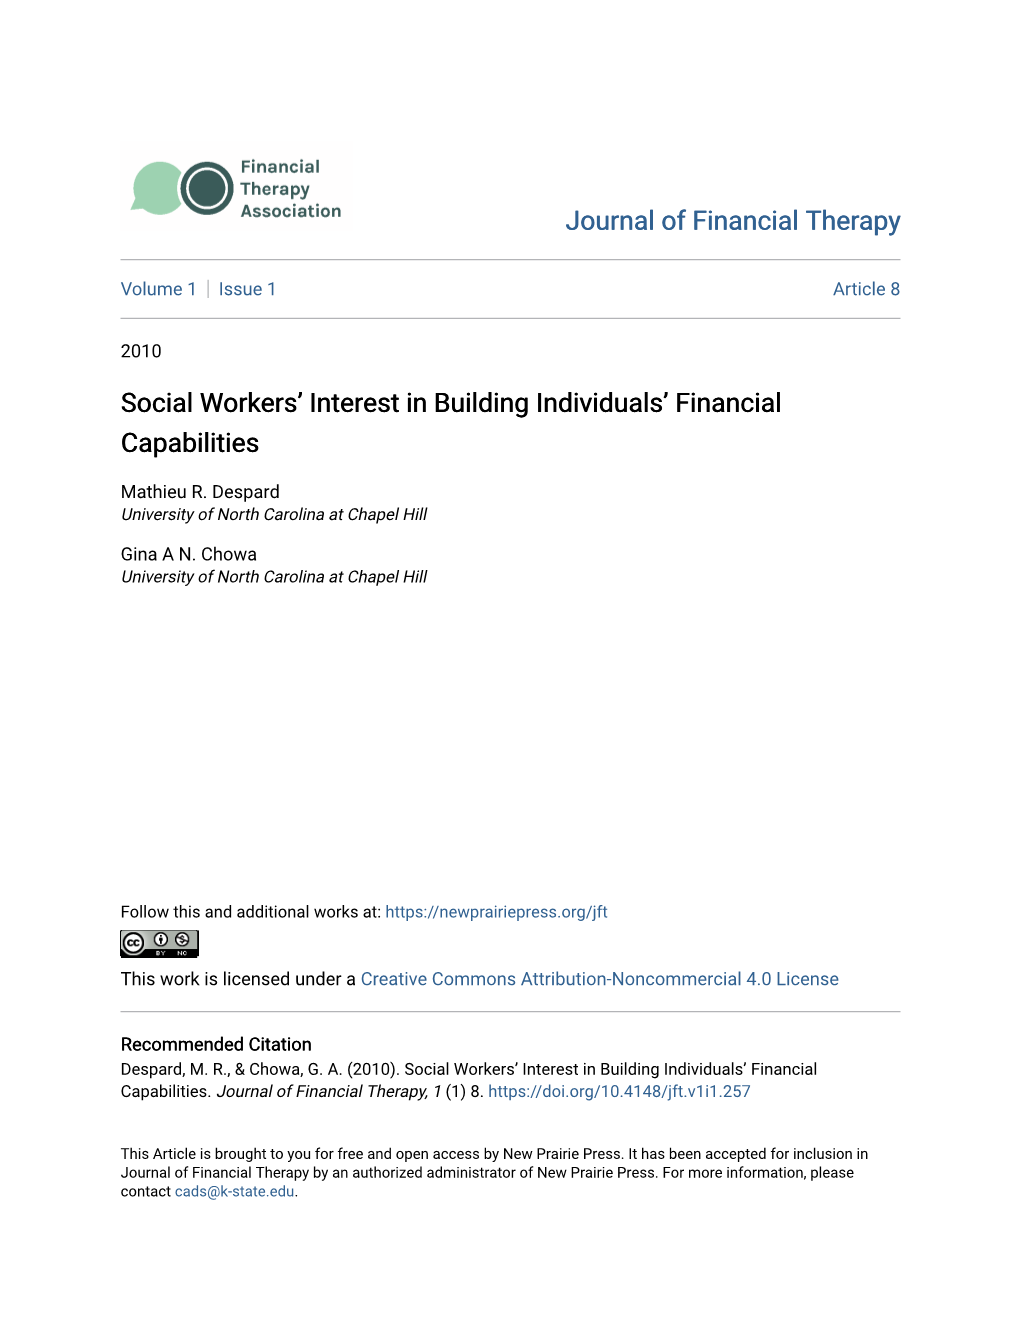 Social Workers' Interest in Building Individuals' Financial Capabilities